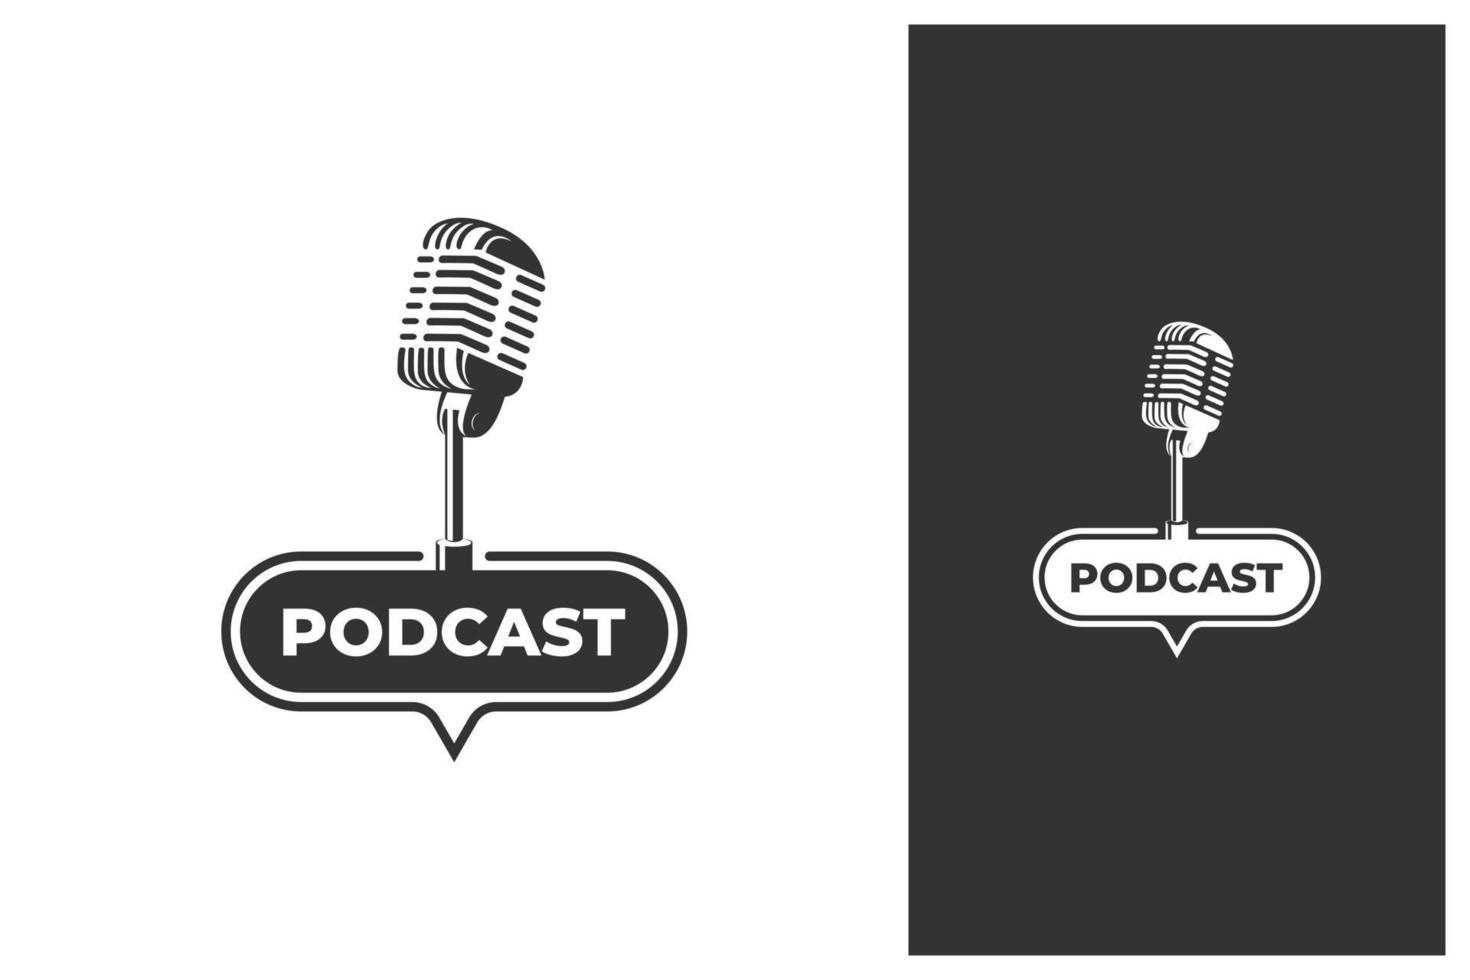 kreativ podcast logotyp design vektor